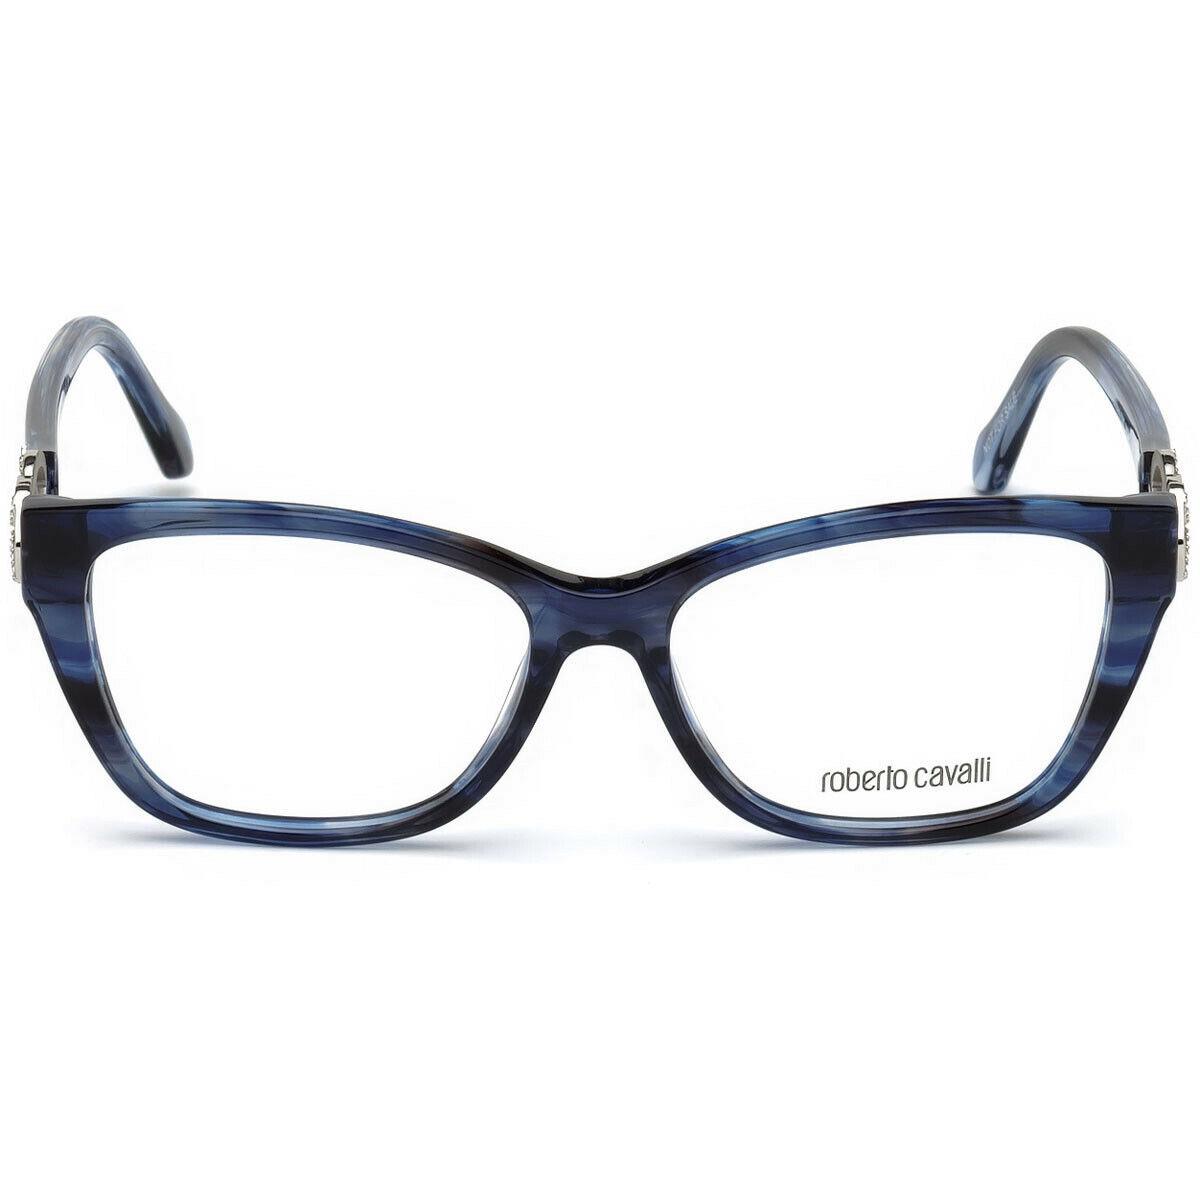 Roberto Cavalli Licciana RC 5060 Blue 092 Eyeglasses Frame 53-15-140 Swarovski